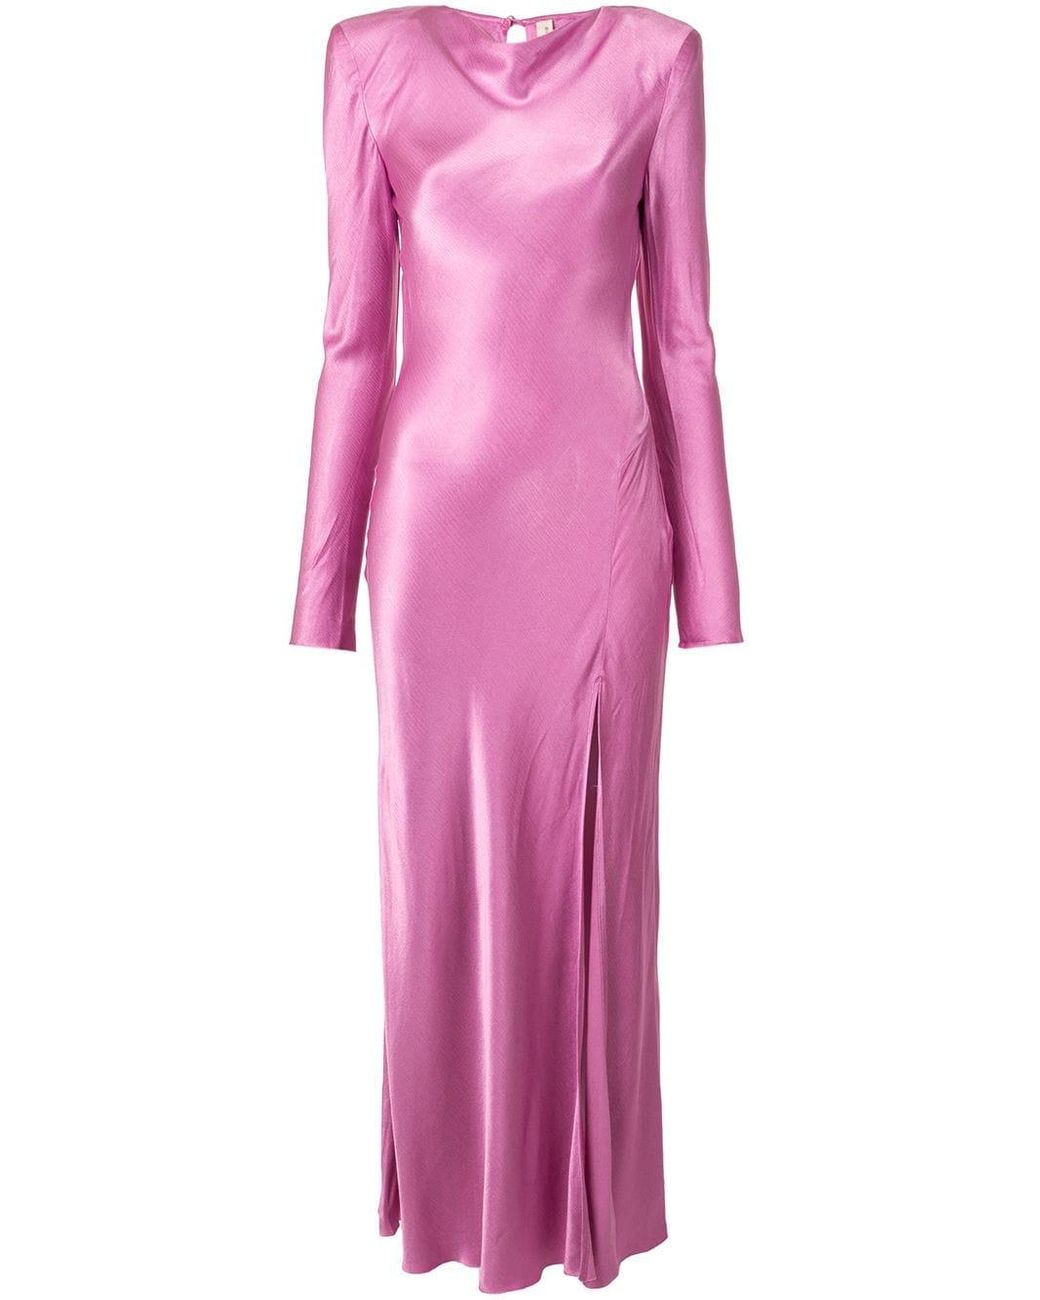 Bec & Bridge Lucie Midi Dress in Pink | Lyst